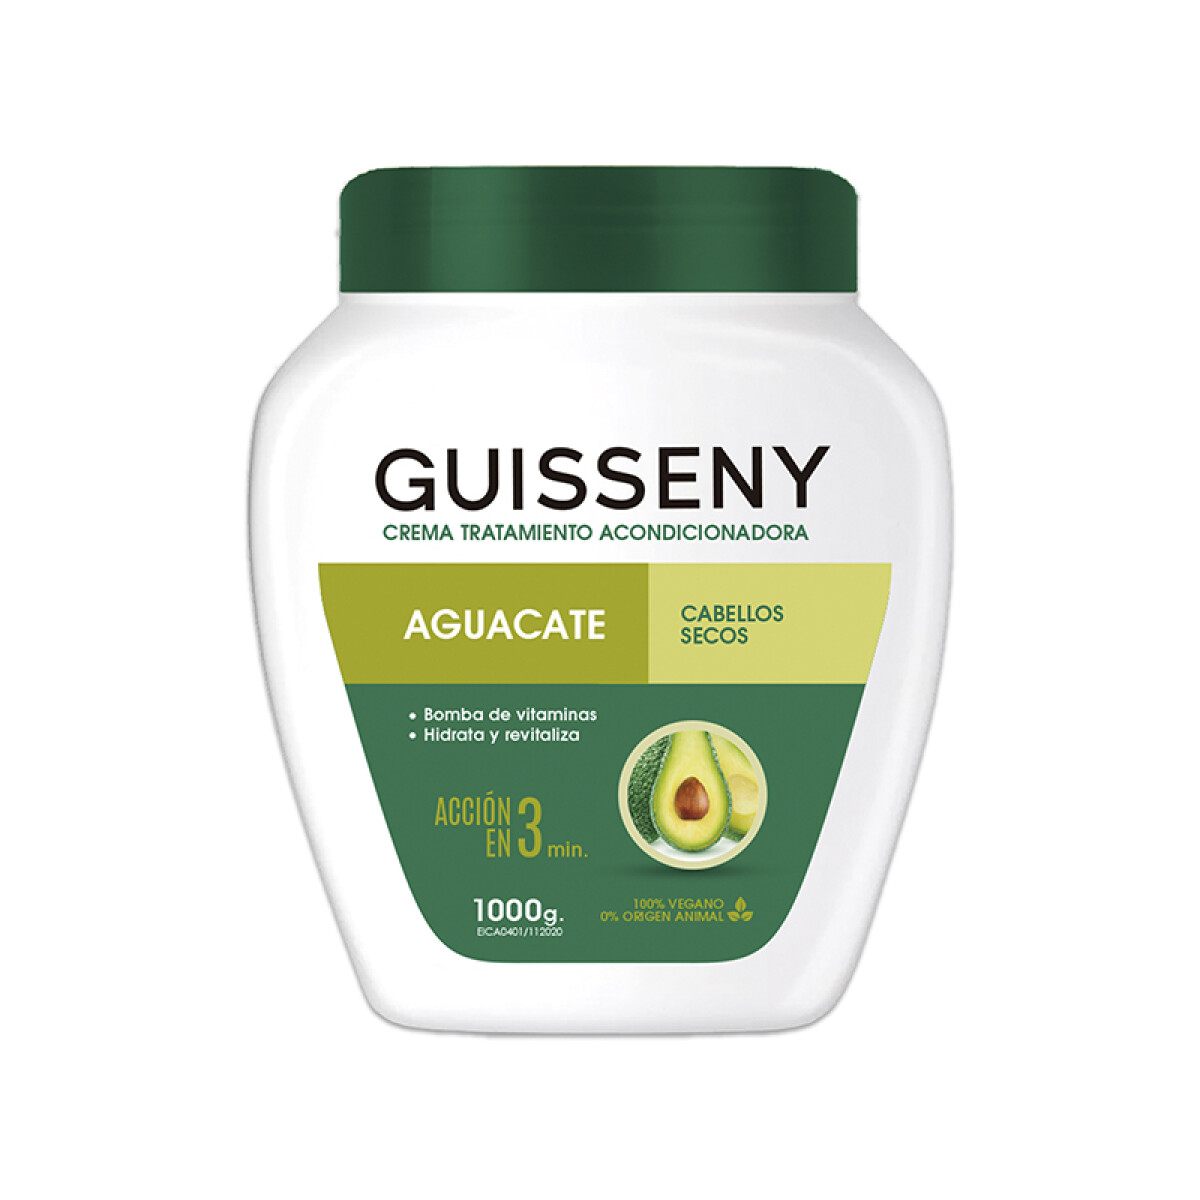 Crema tratamiento capilar 1000 g Guisseny - Aguacate 